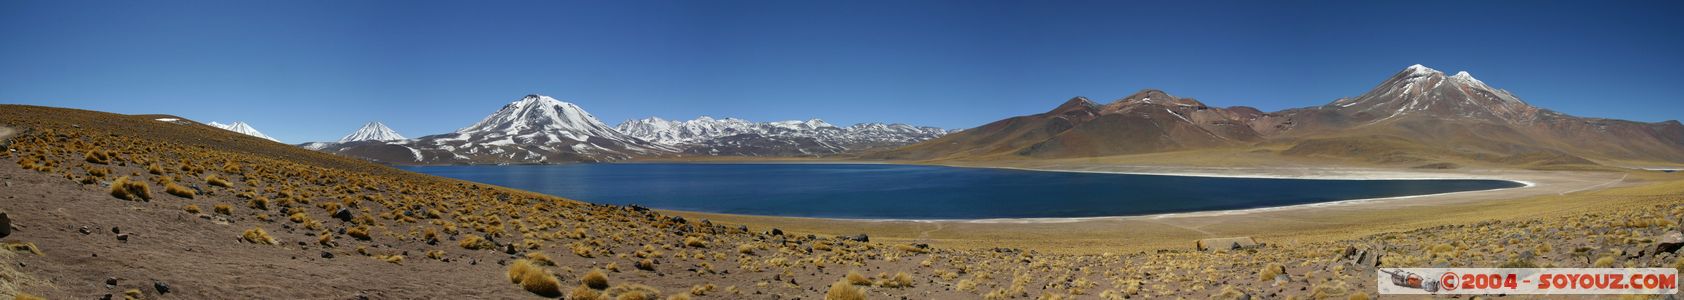 Reserva Nacional Los Flamencos - Laguna Miscanti - panorama
Mots-clés: chile Lac Montagne panorama